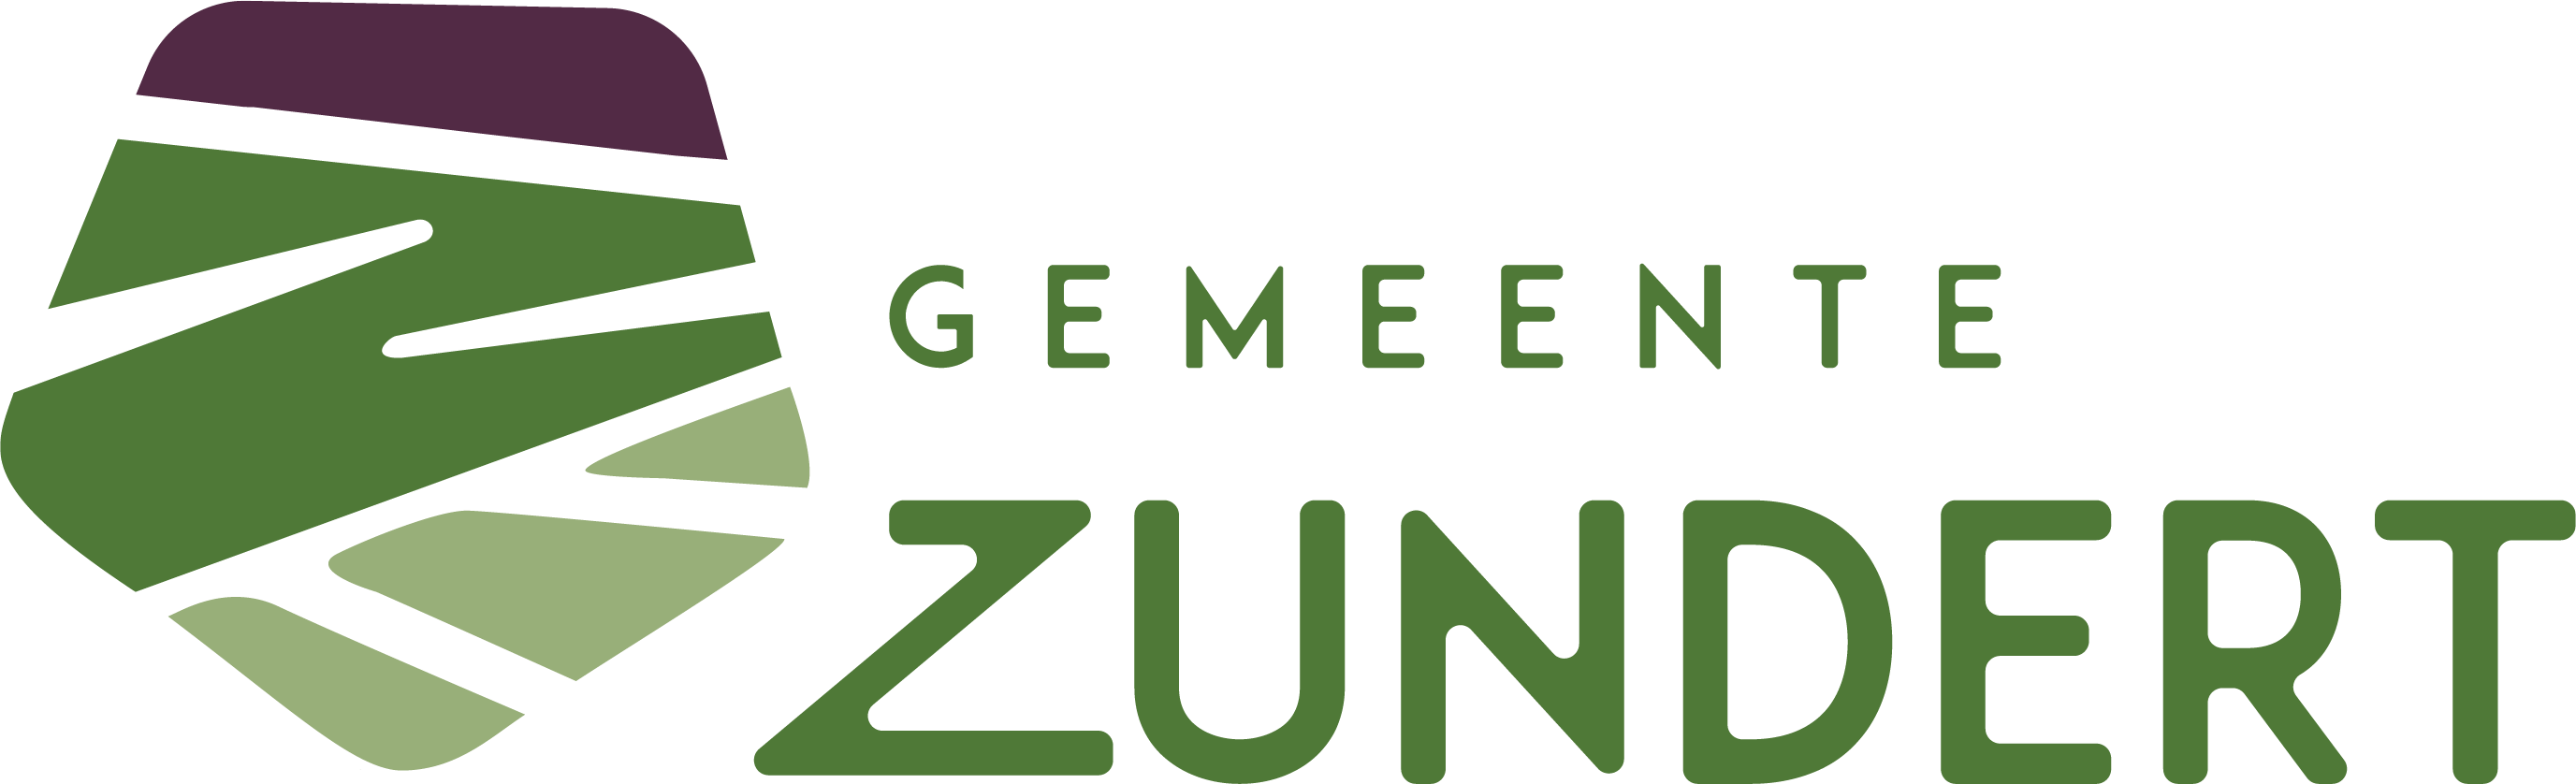 Gemeente Zundert_logo